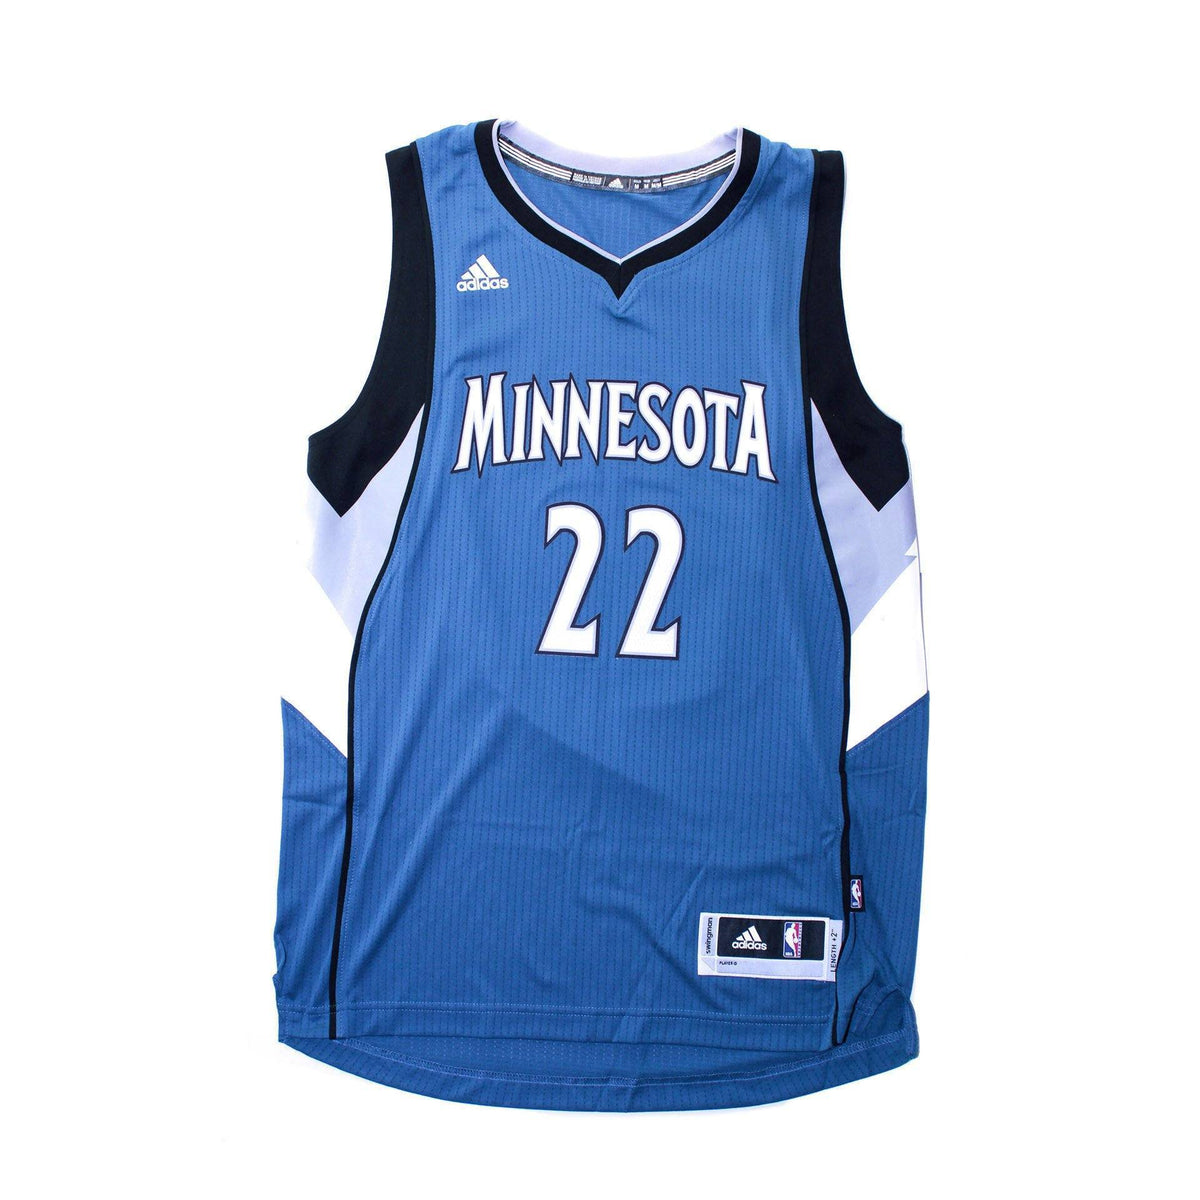 Adidas Minnesota Timberwolves Andrew Wiggins Blue Jersey Size